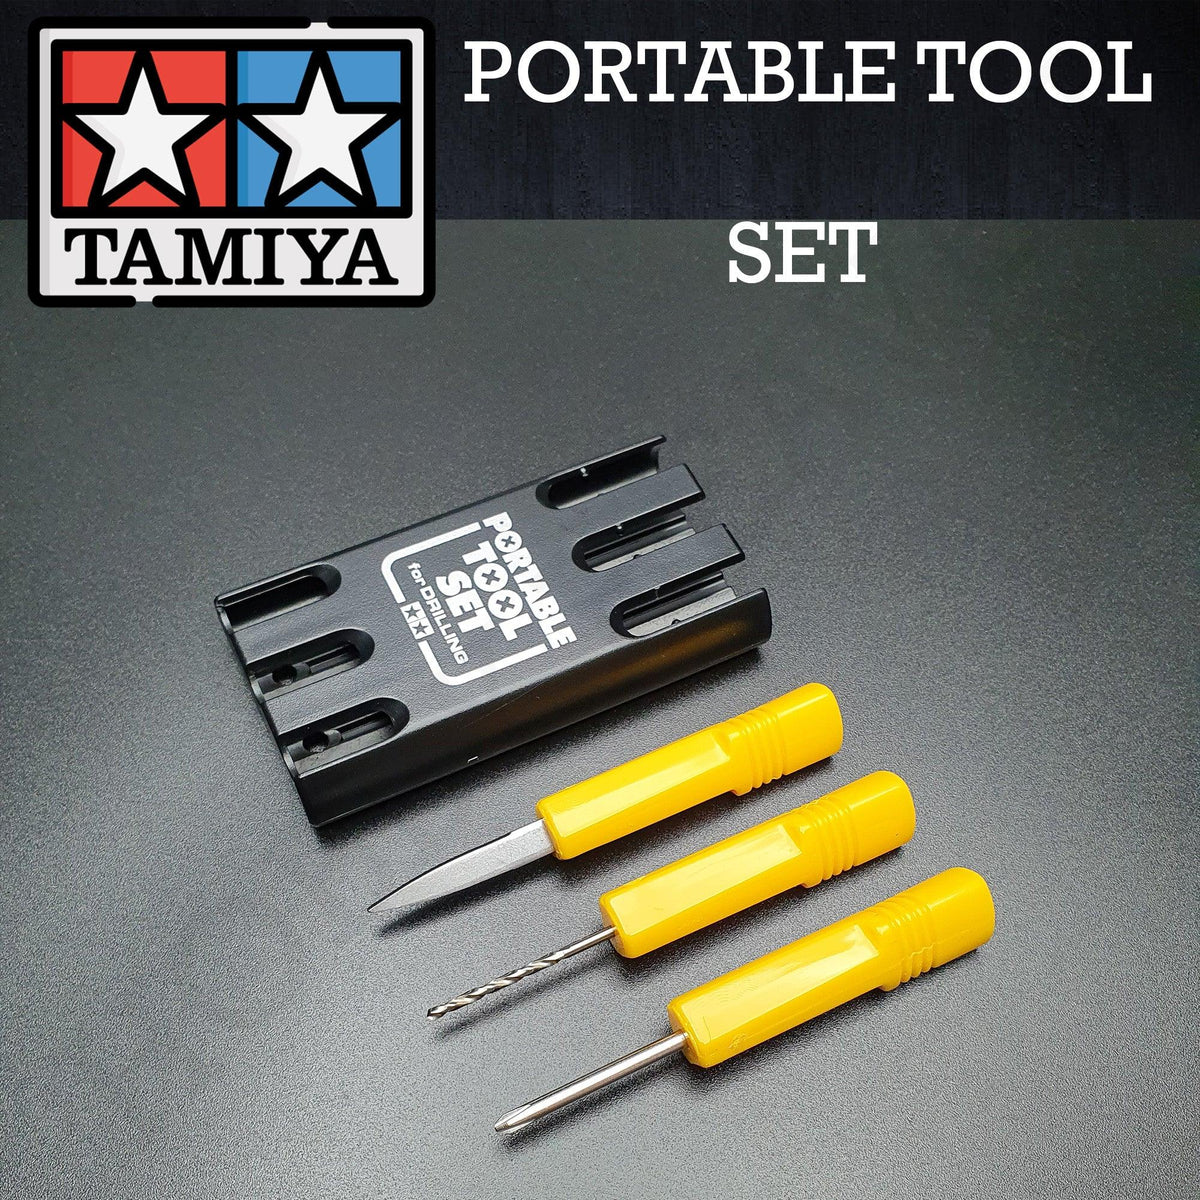 Tamiya Basic Drill Set 74049